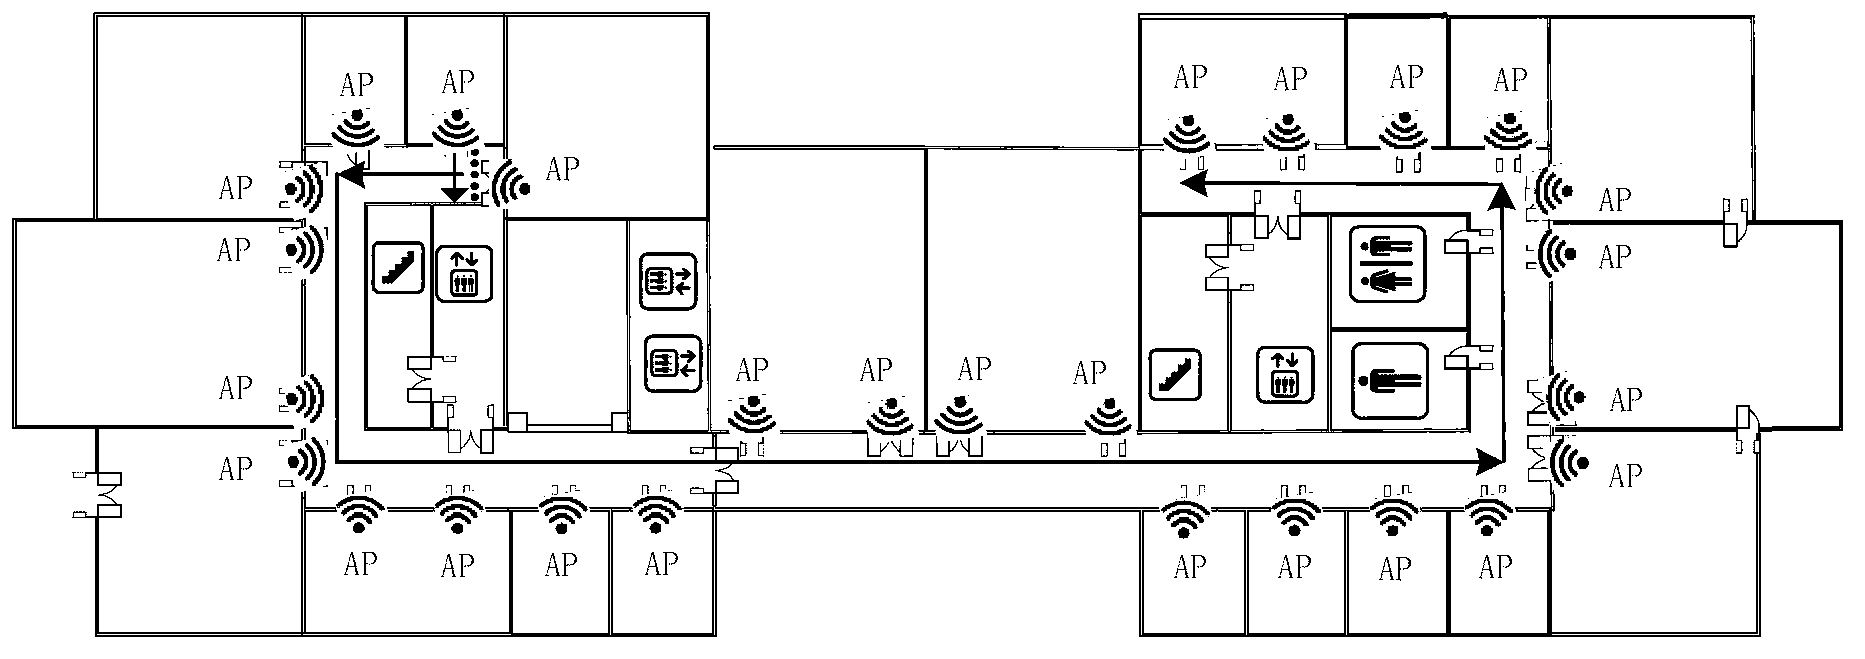 LDE (Linear Discriminant Analysis) algorithm-based WiFi (Wireless Fidelity) indoor locating method